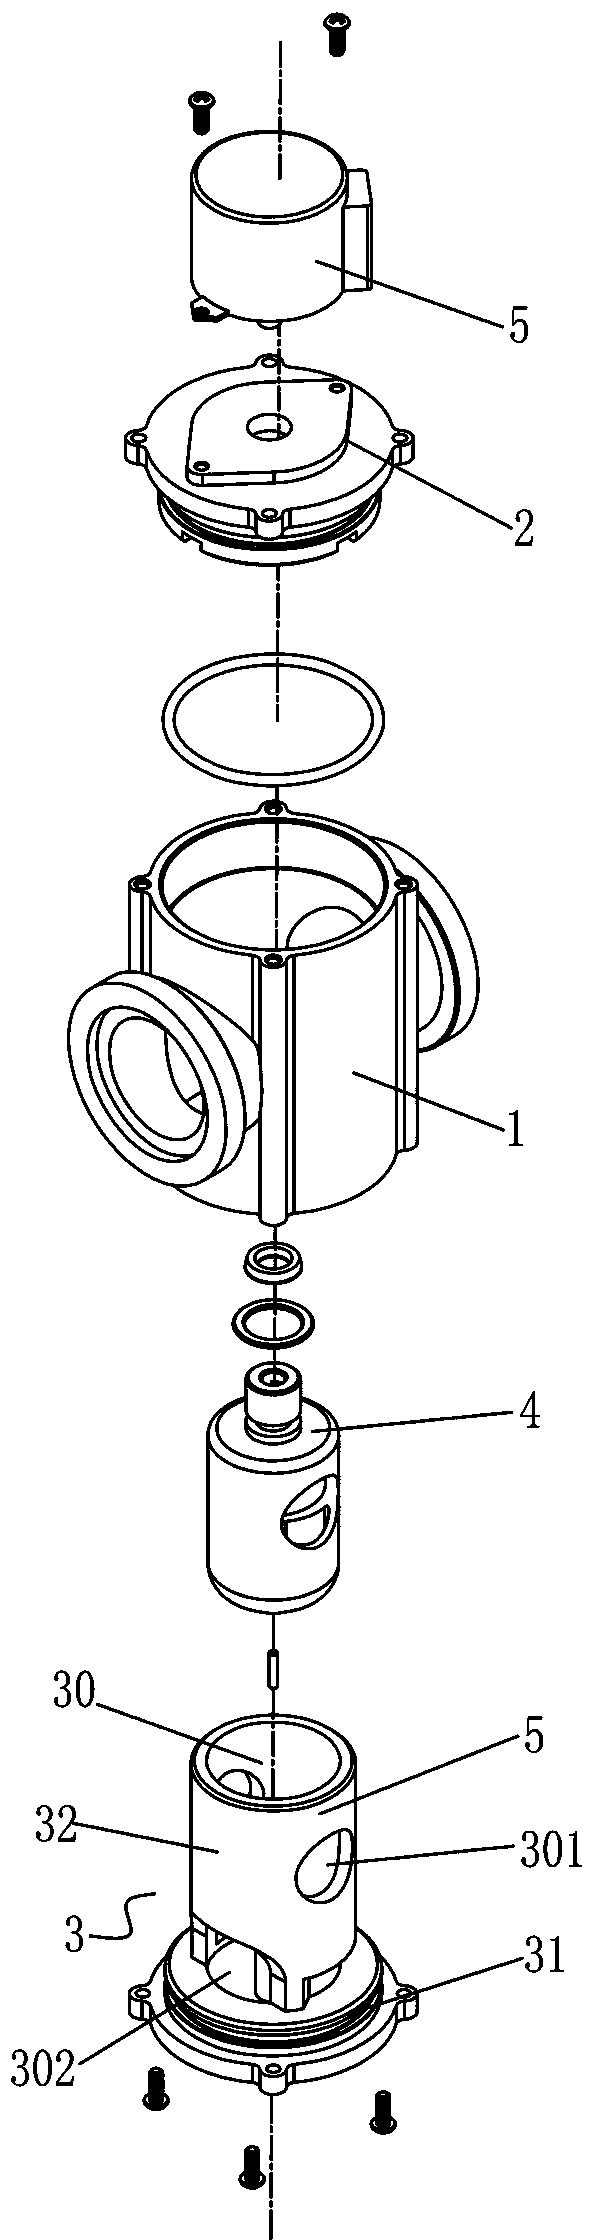 A buffer suspension flow regulating device